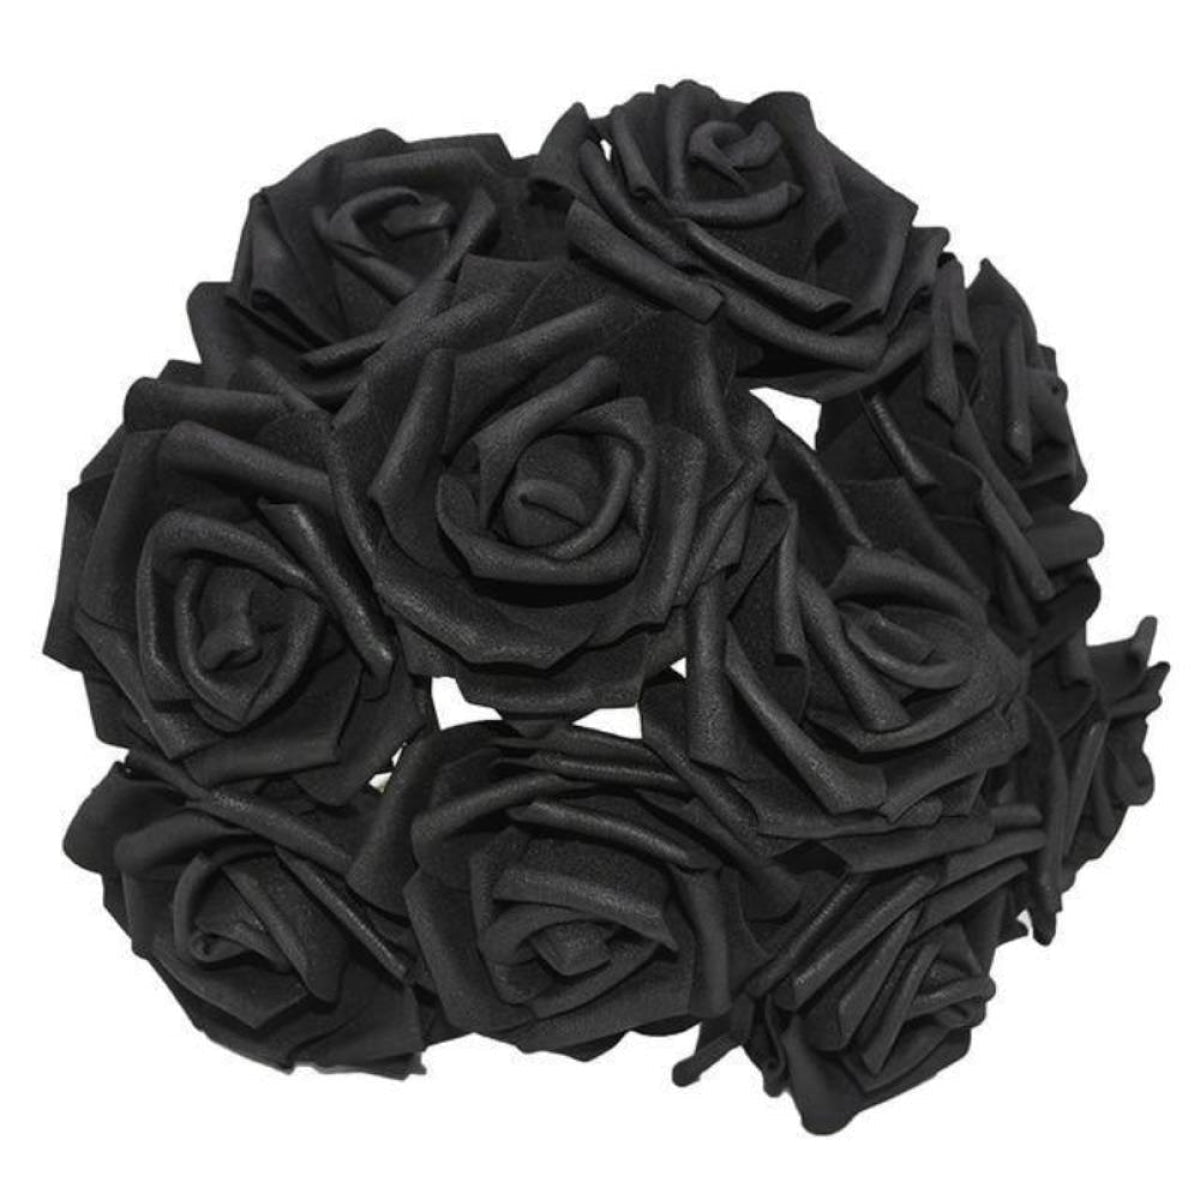 20pcs 8cm Artificial Flowers Foam Rose Fake Bride Bouquet Wedding - Black - - Asia Sell